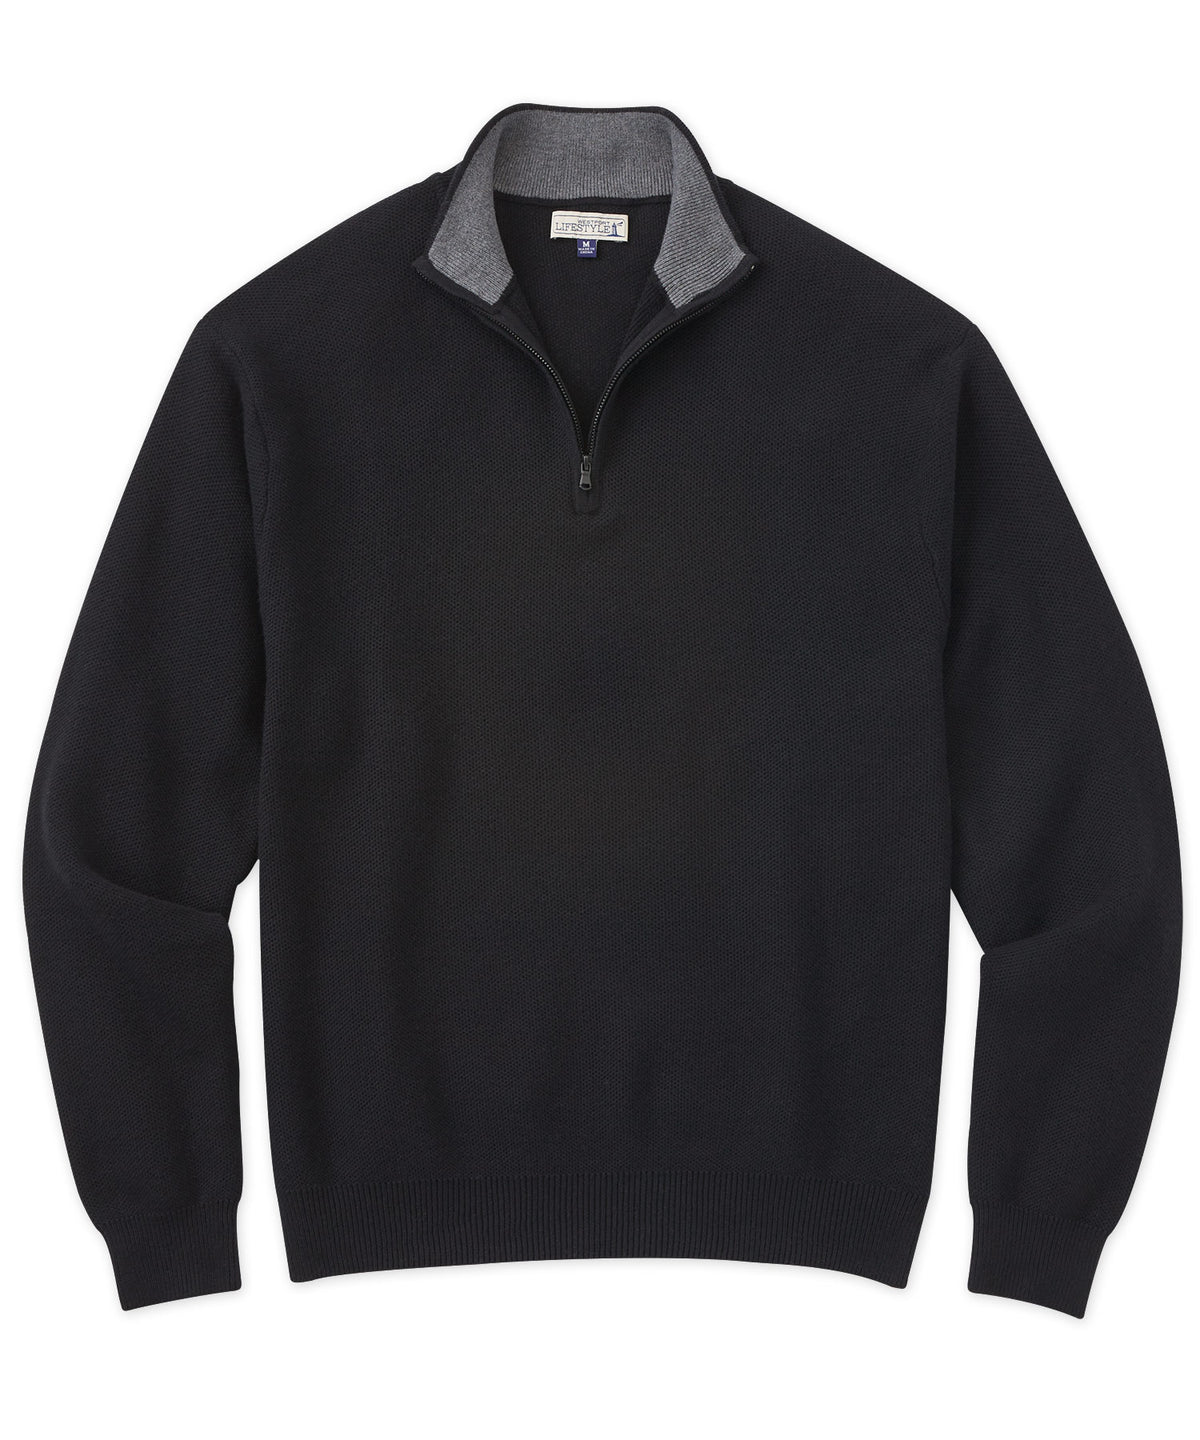 Westport Lifestyle Cotton Cashmere Quarter-Zip Pullover, Men's Big & Tall